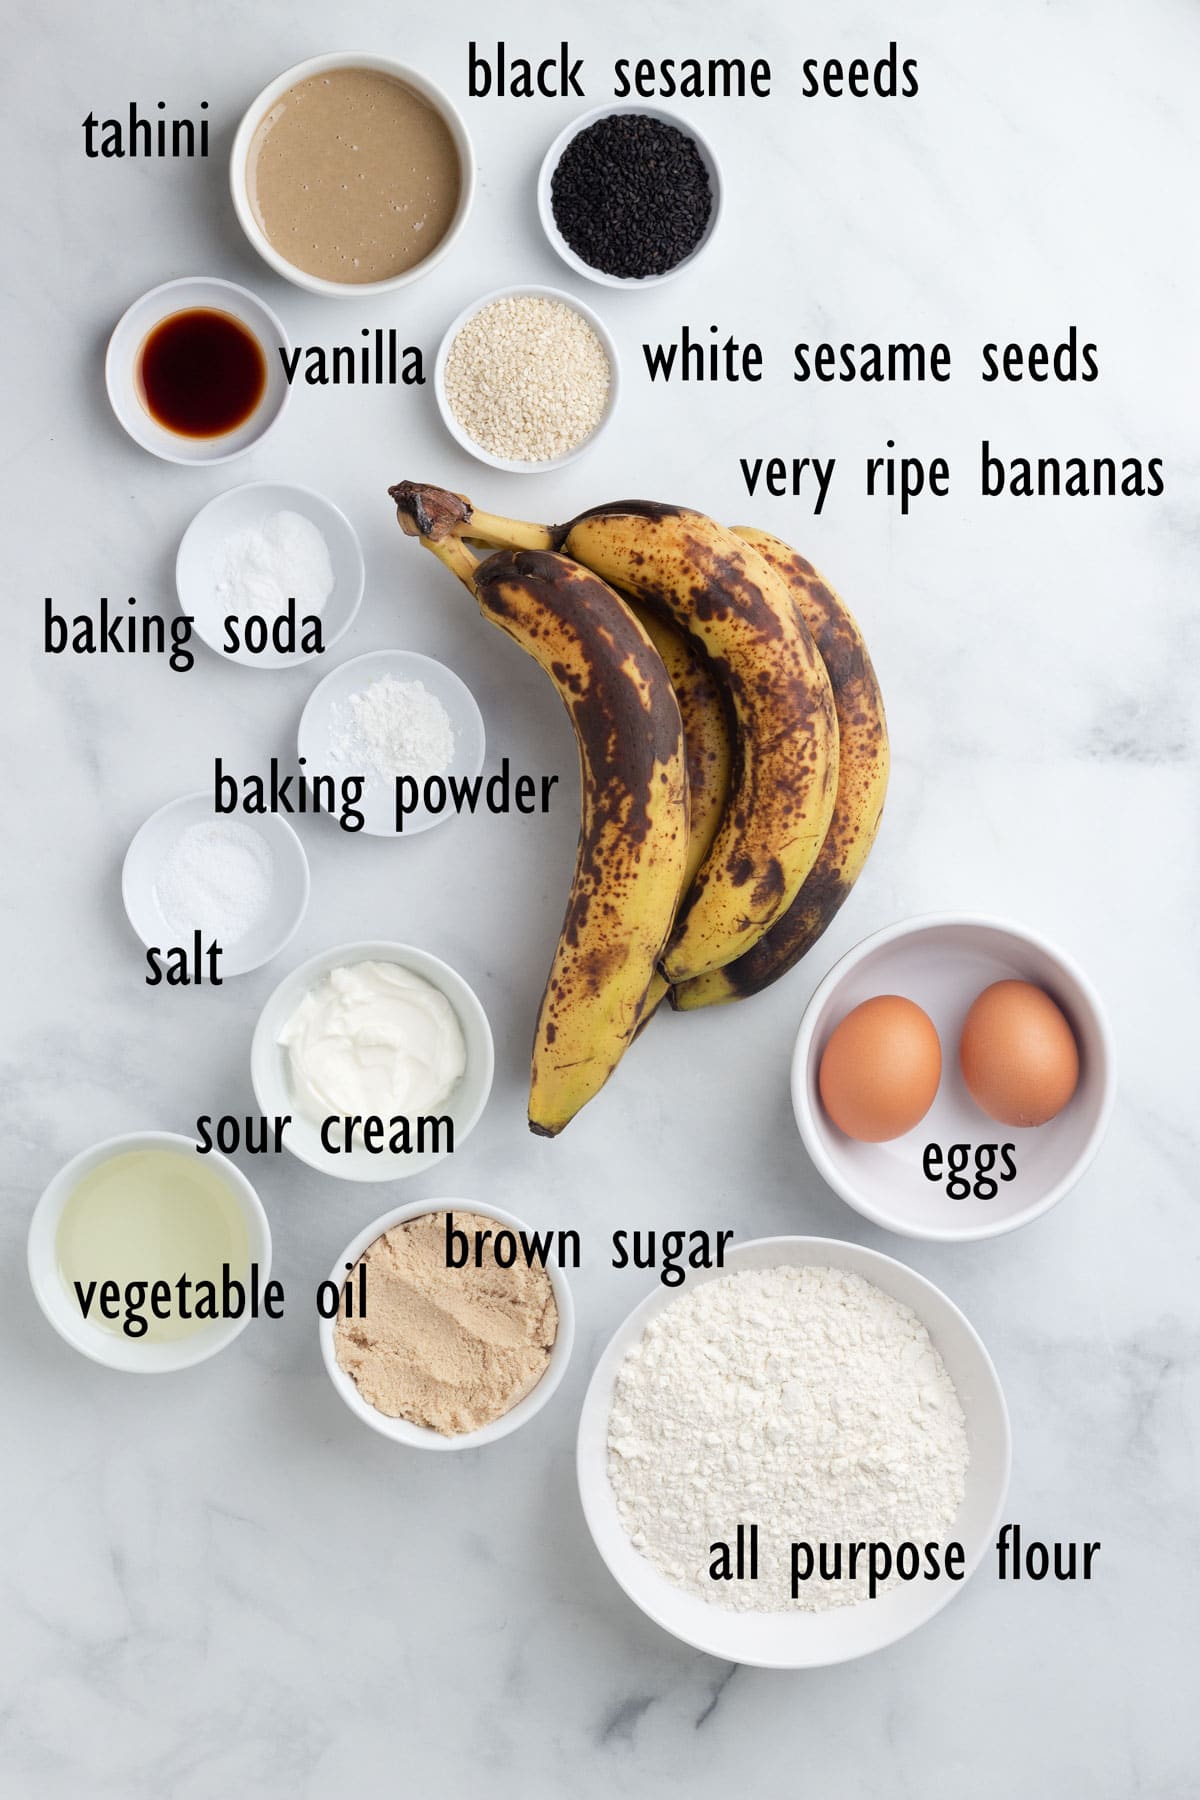 Banana Bread Ingredients including bananas, black and white sesame seeds, tahini, flour, brown sugar and eggs.